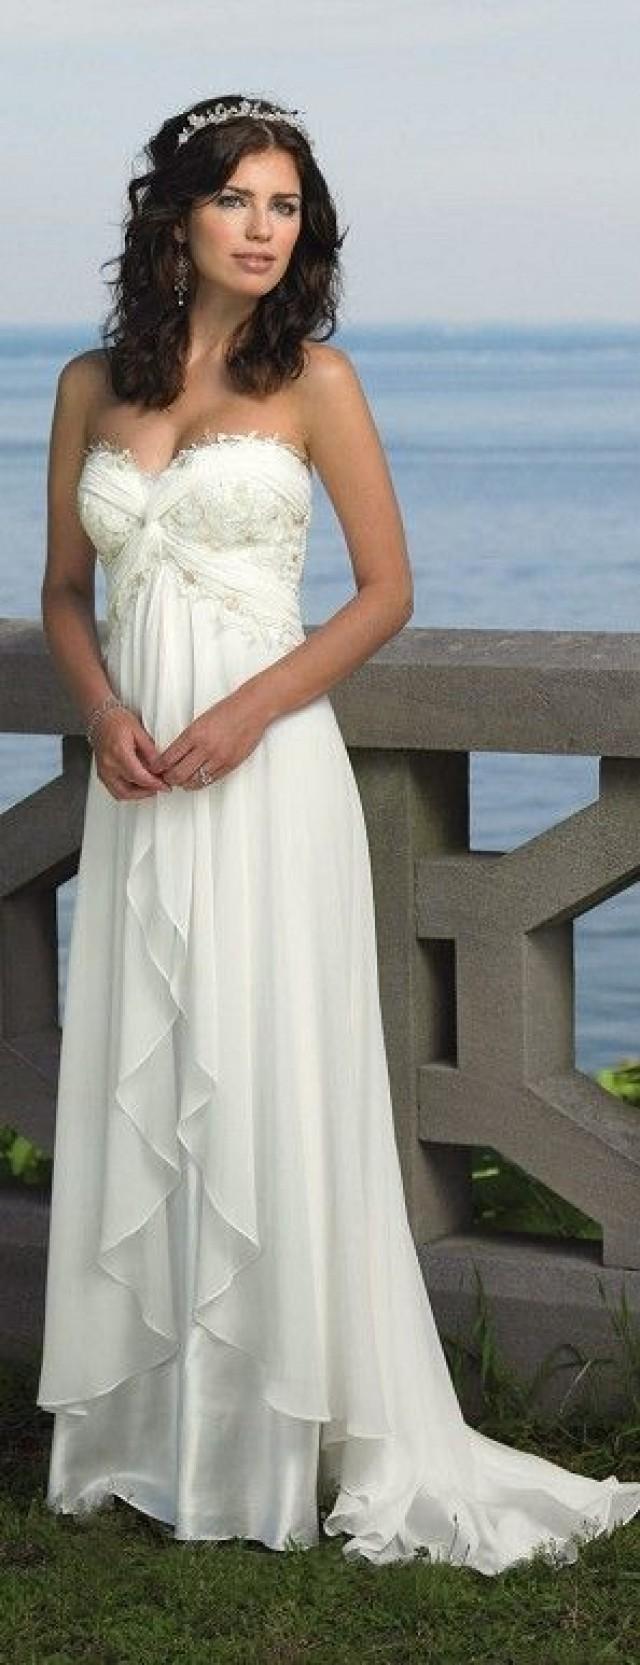 New Off White Chiffon Beach Wedding Dress Bridal Gown Size 10 2176461